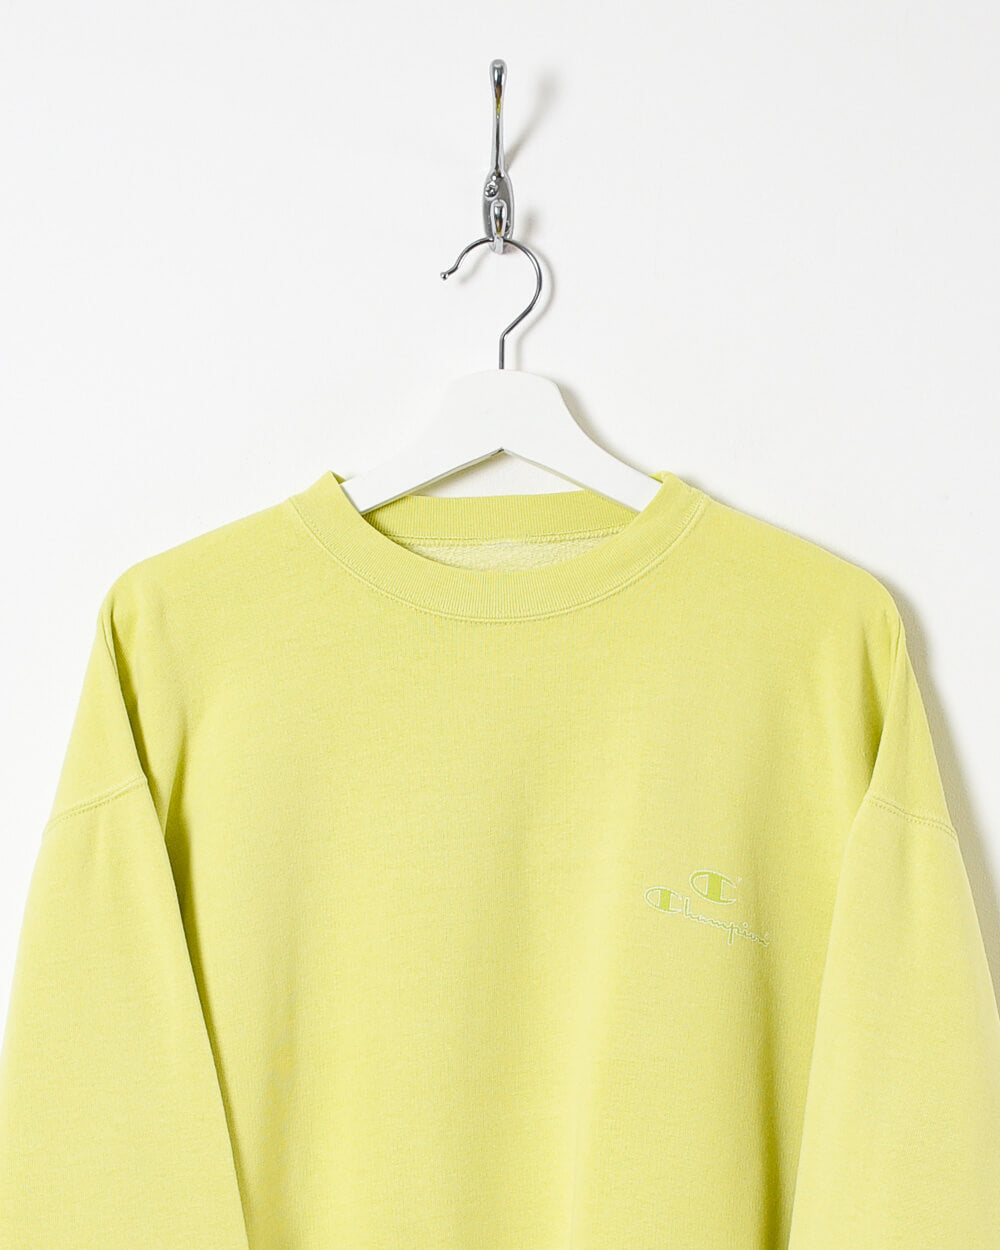 Green Champion Sweatshirt - Medium